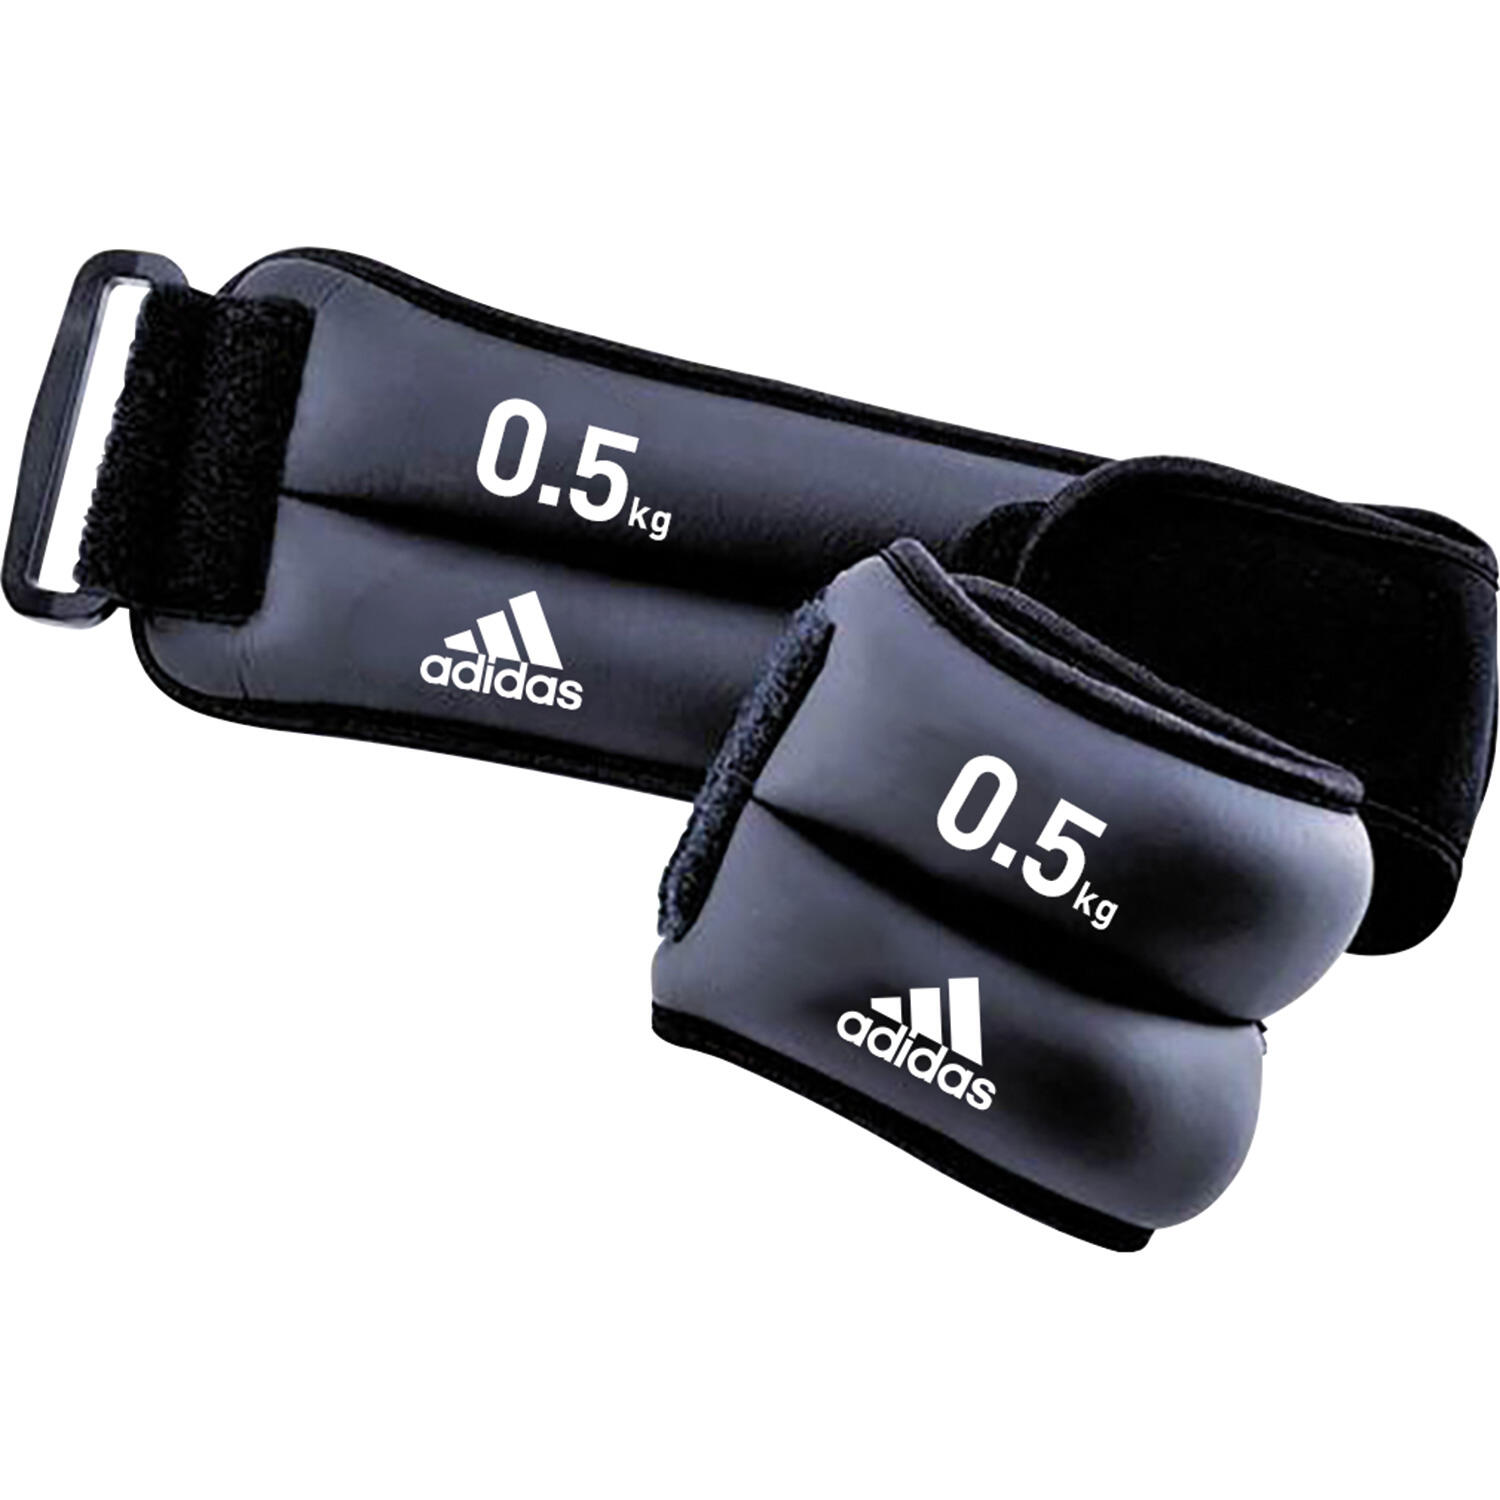 ADIDAS Adidas Ankle Wrist Weights 2 x 0.5kg